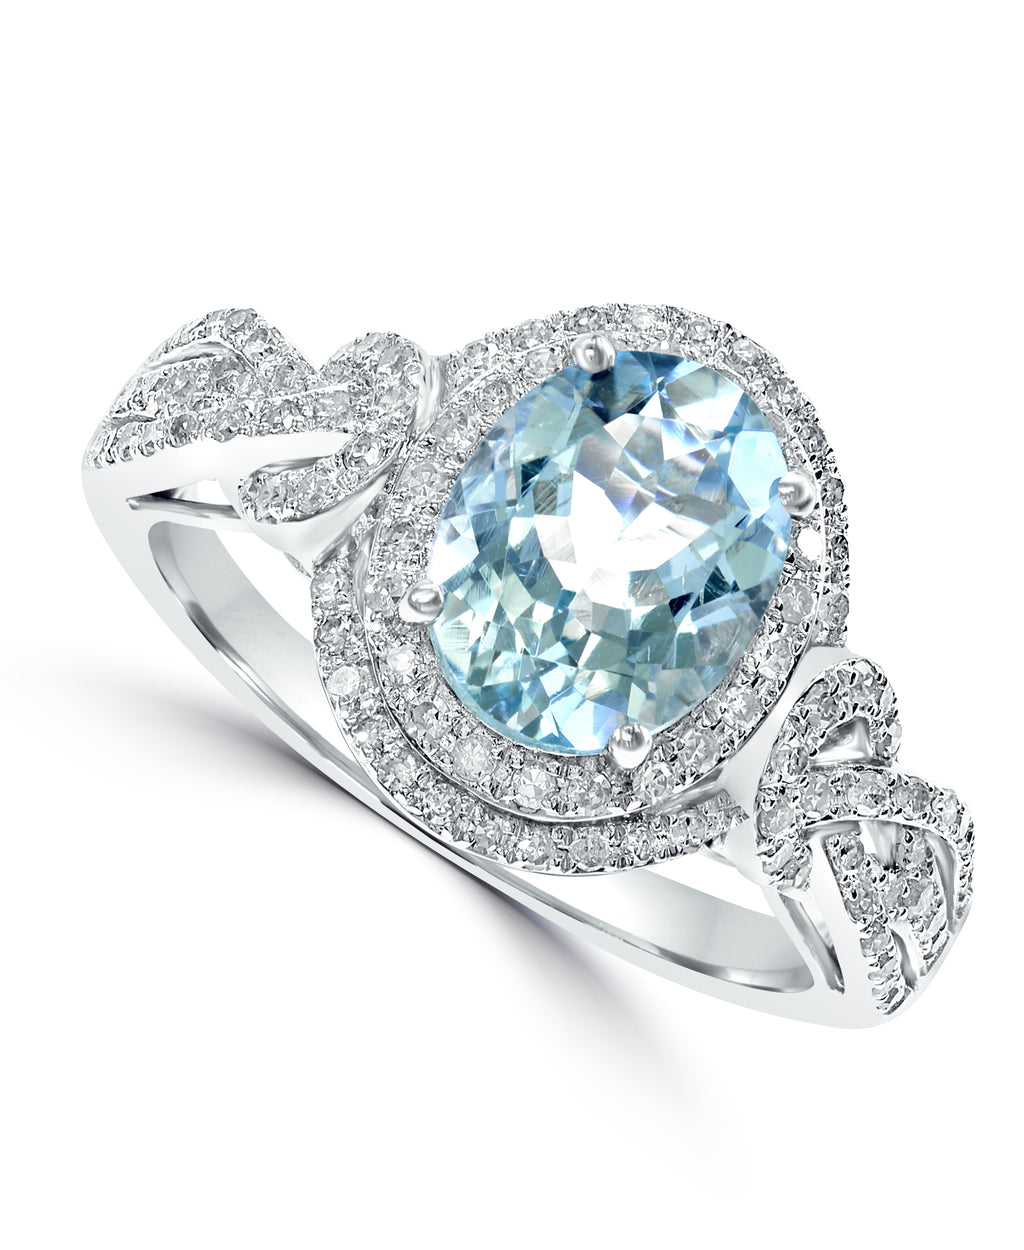 Effy 14K White Gold Diamond and Aquamarine Ring